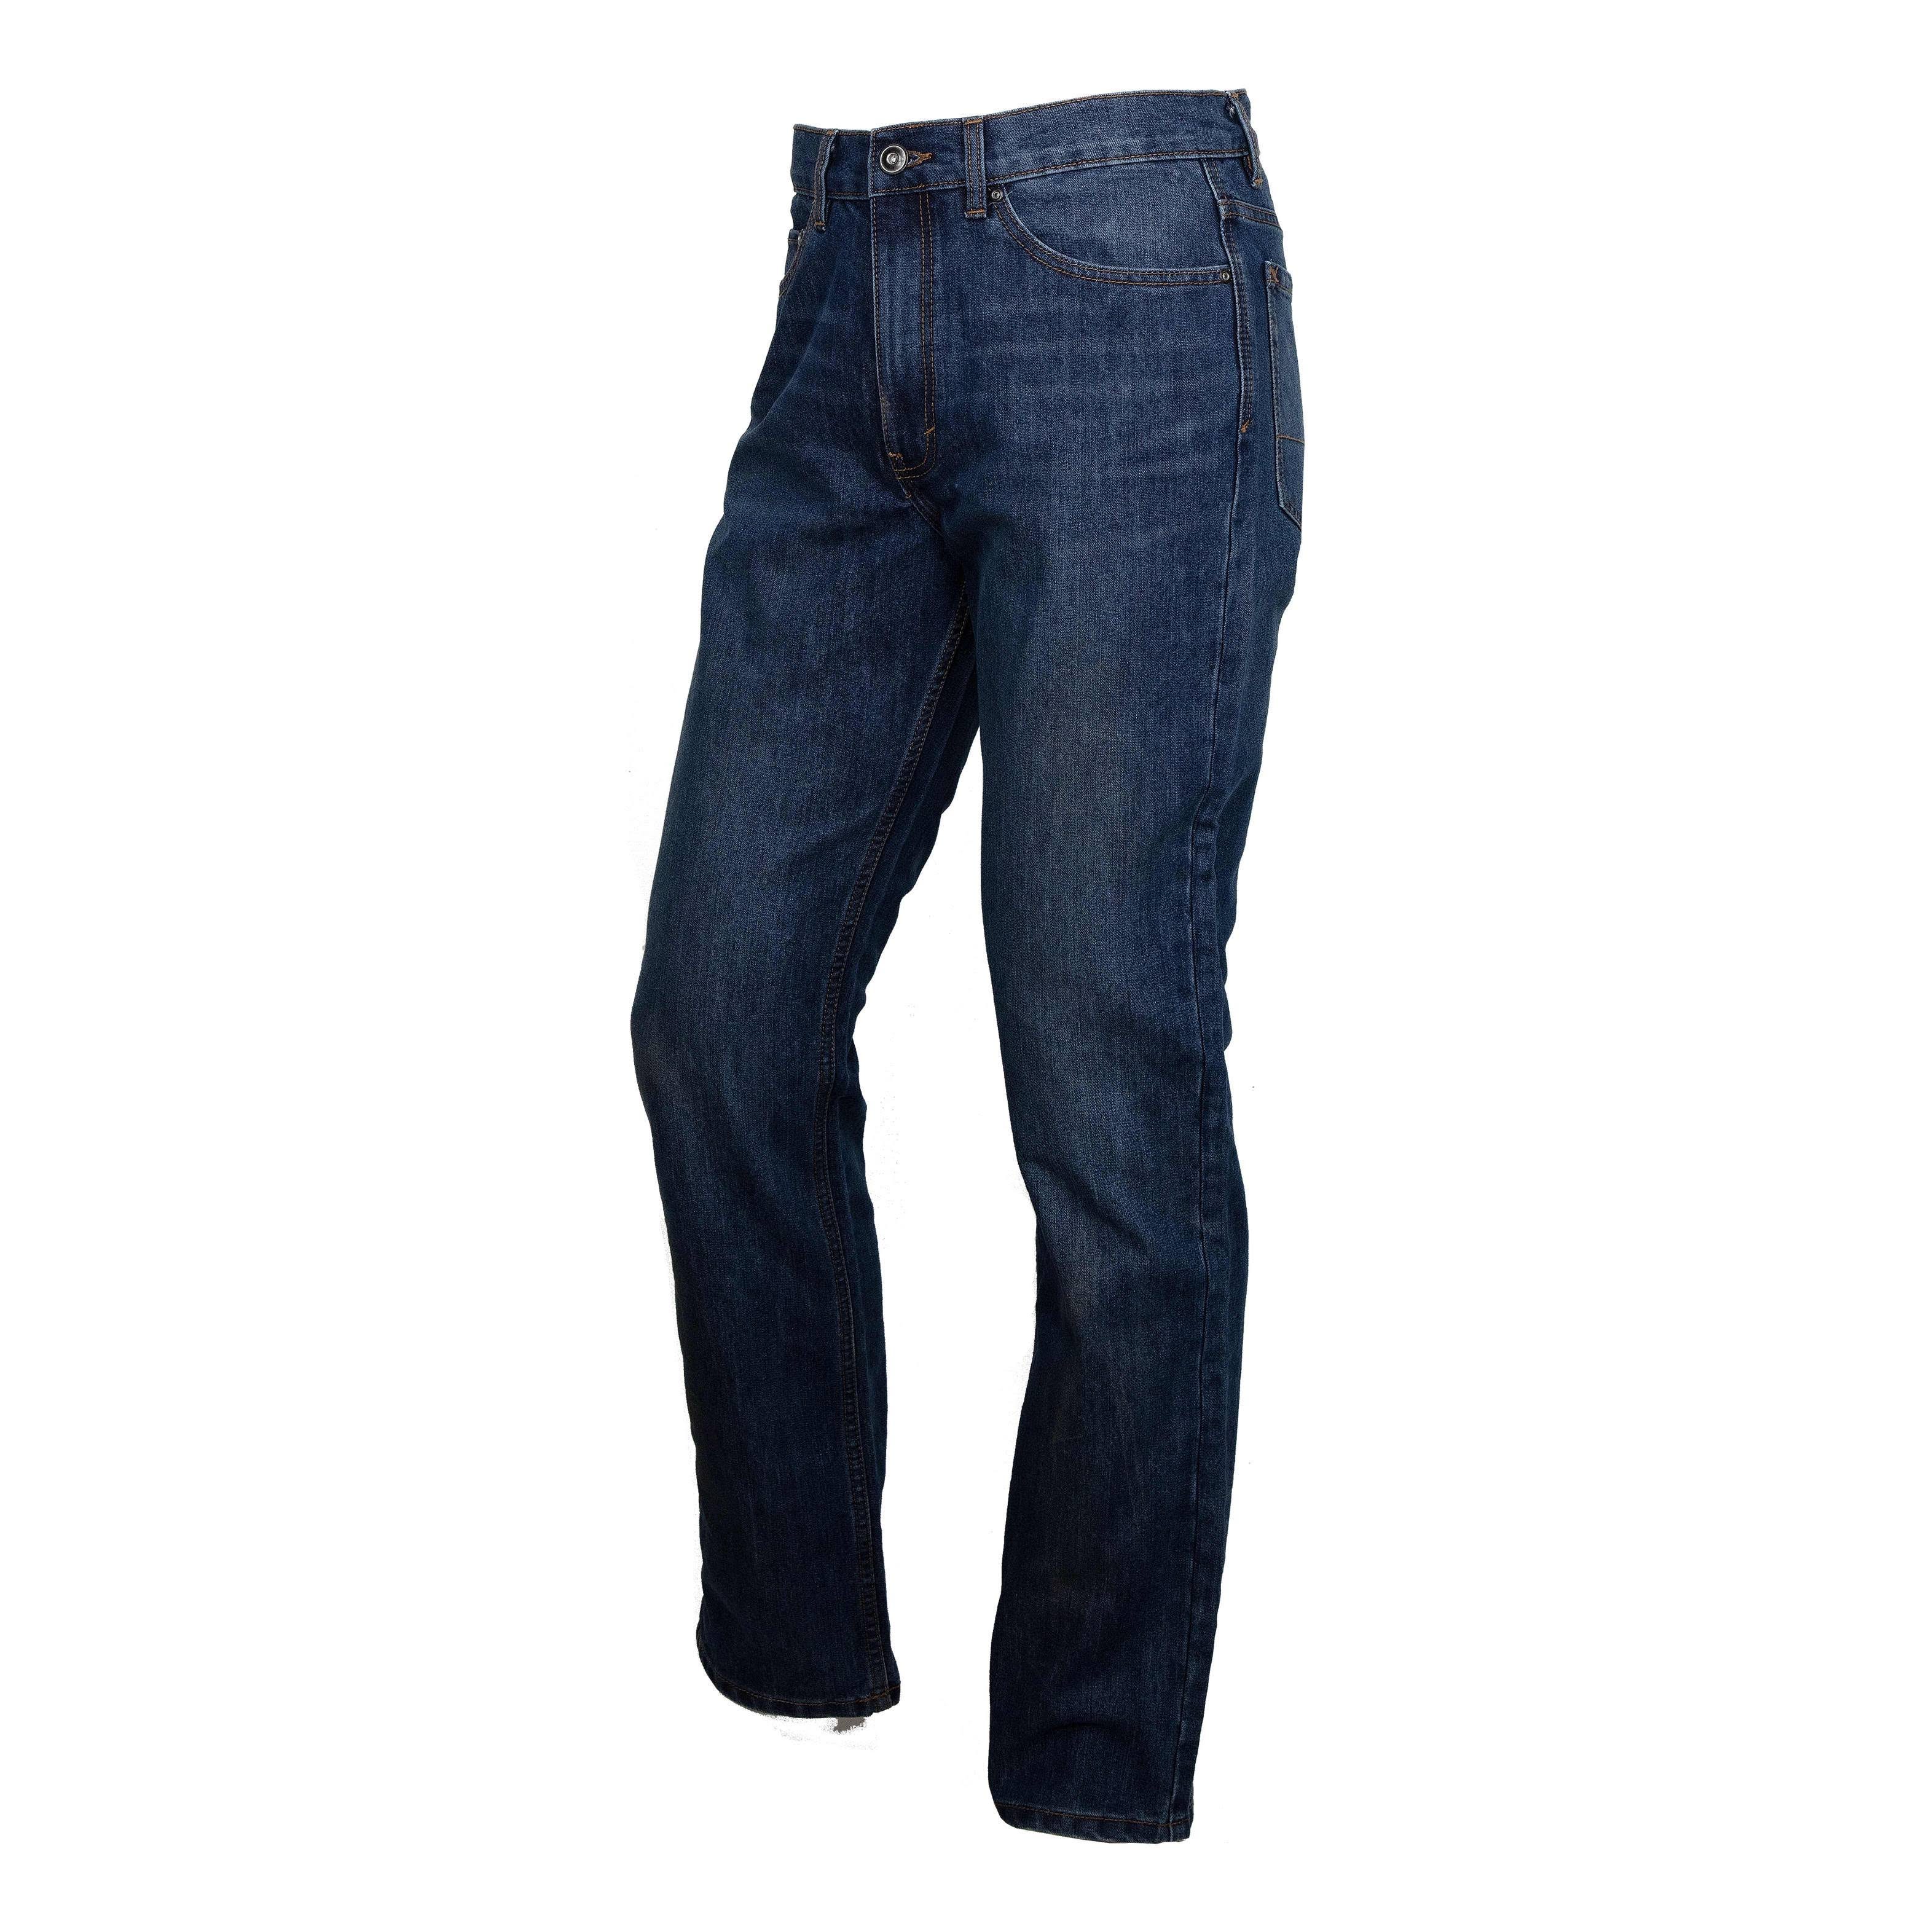 Comfy Men's Jeans: Flexible and Fashionable Straight-Leg Denim Pants | Image